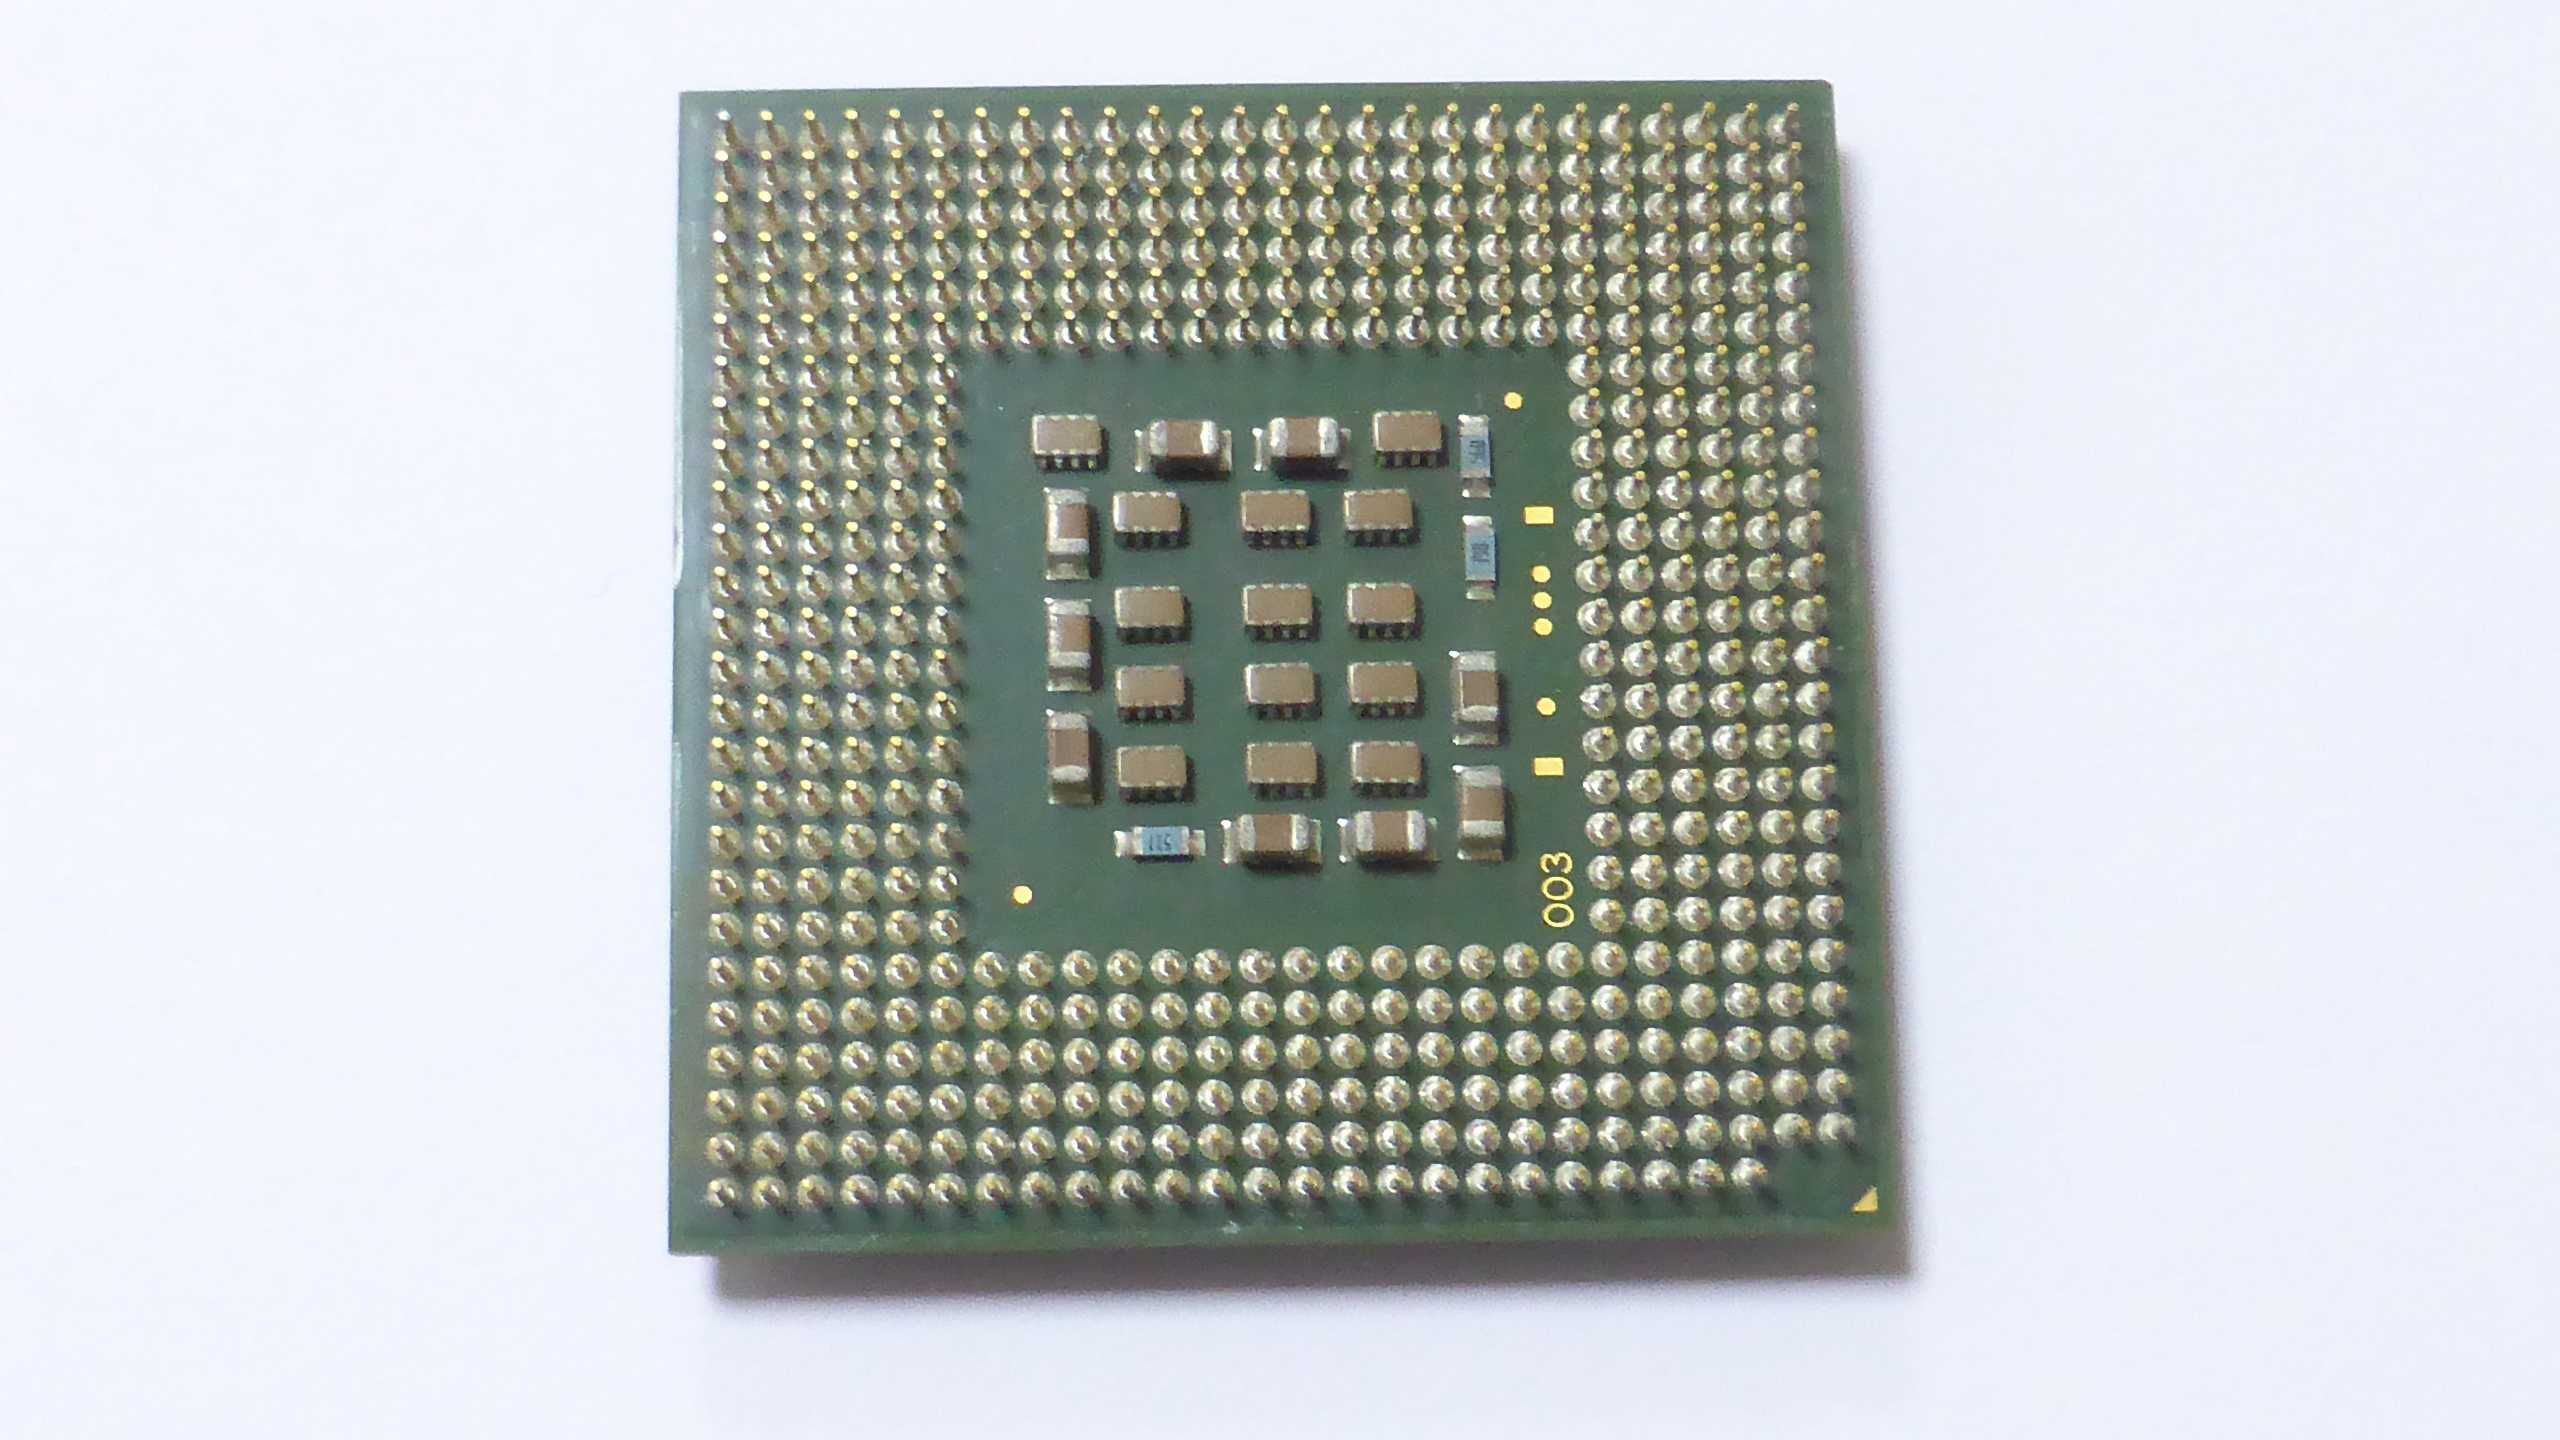 CPU Intel Celeron D330